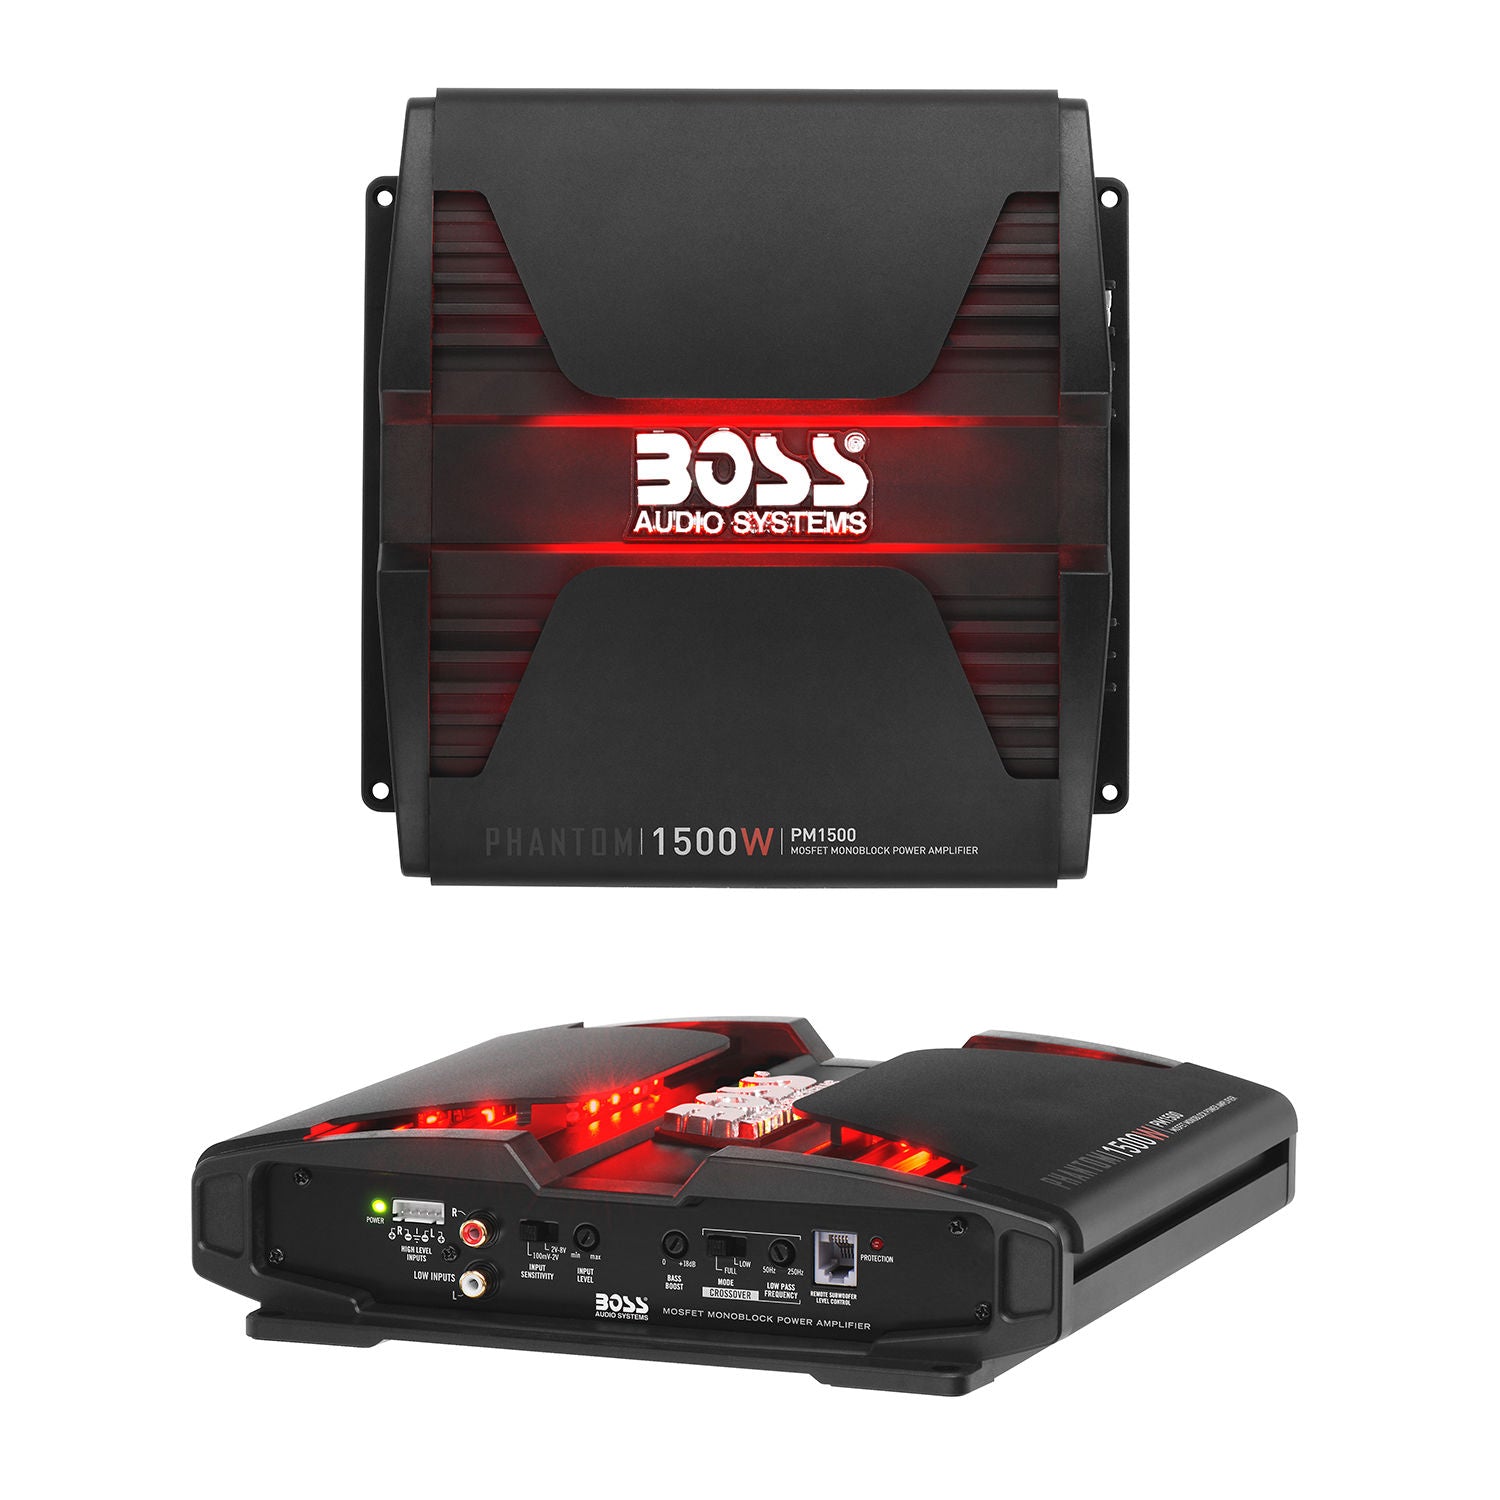 Boss PM1500 - Phantom Model 1500W High Output Monoblock